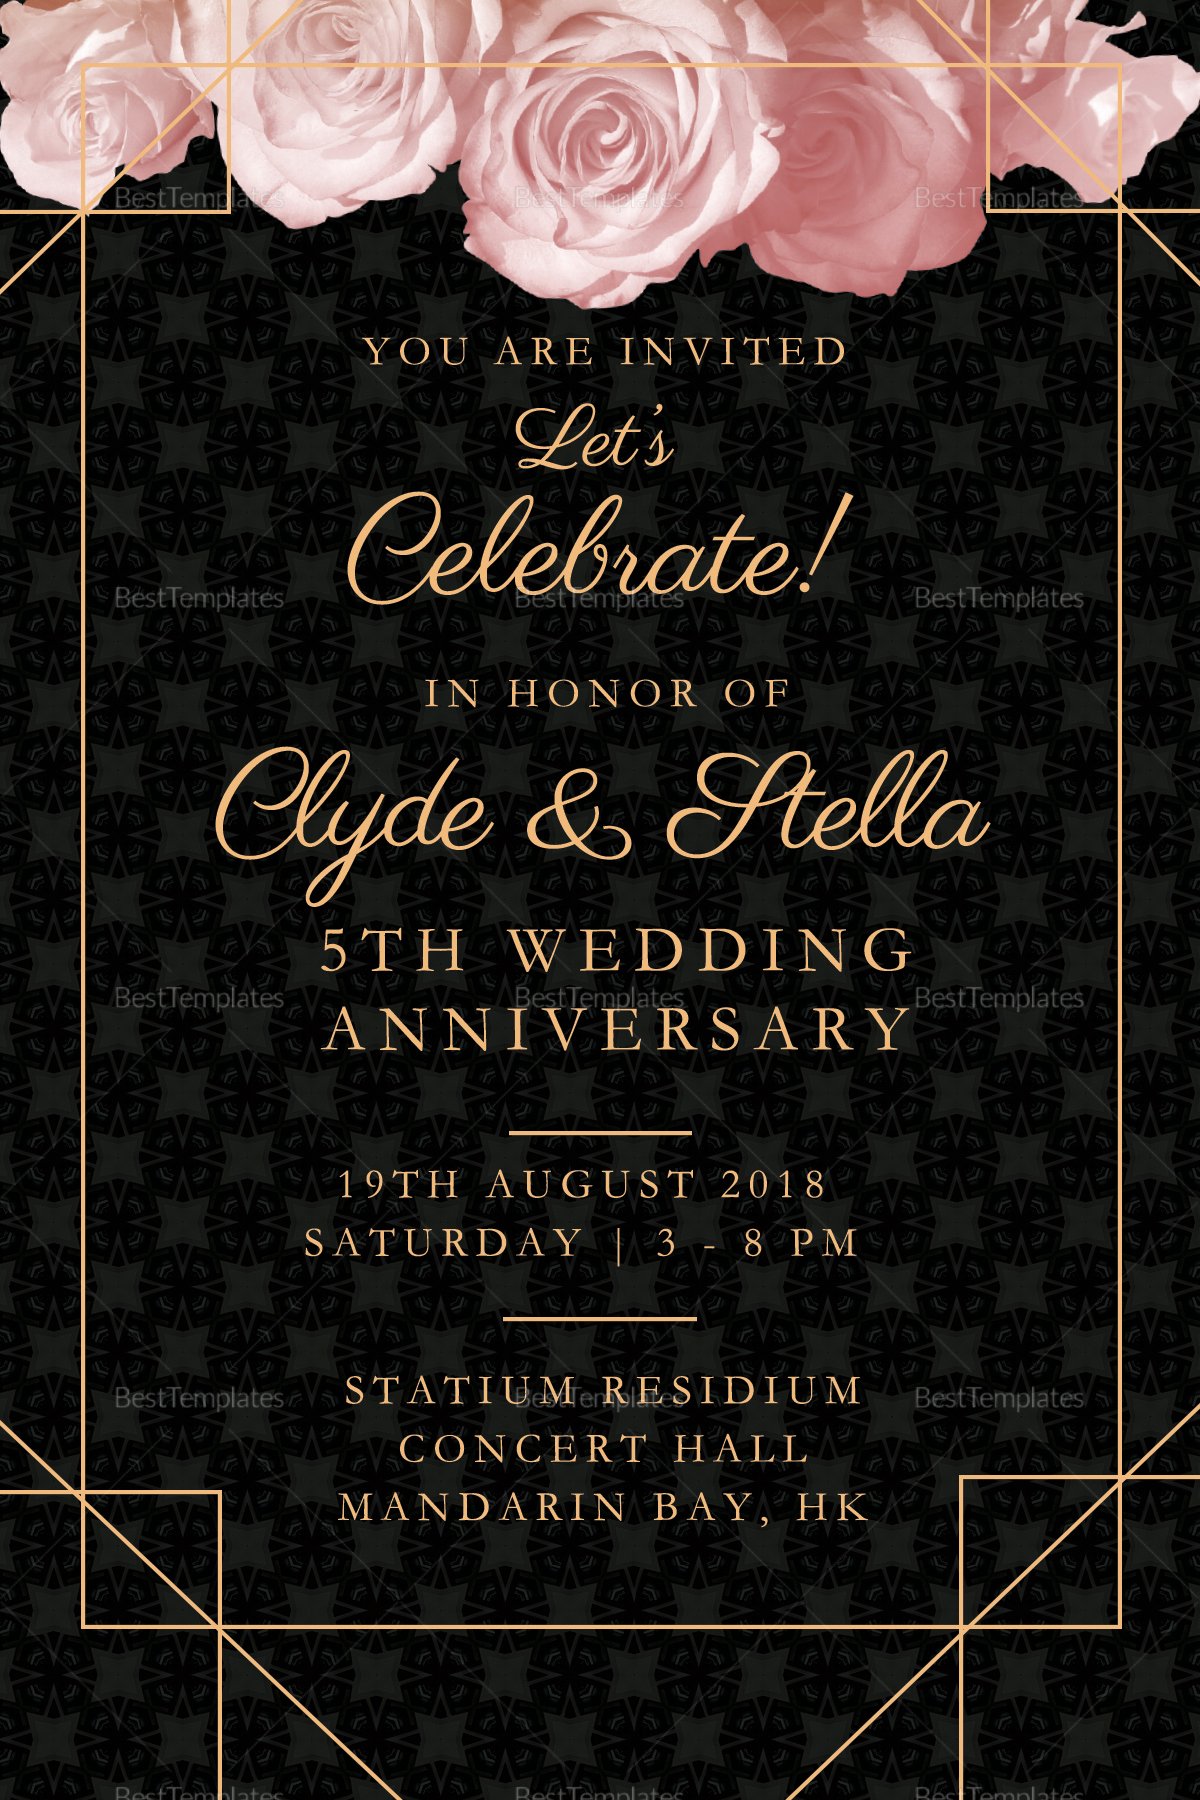 Wedding Anniversary Invitation Template Awesome Elegant Wedding Anniversary Invitation Design Template In Psd Word Publisher Illustrator